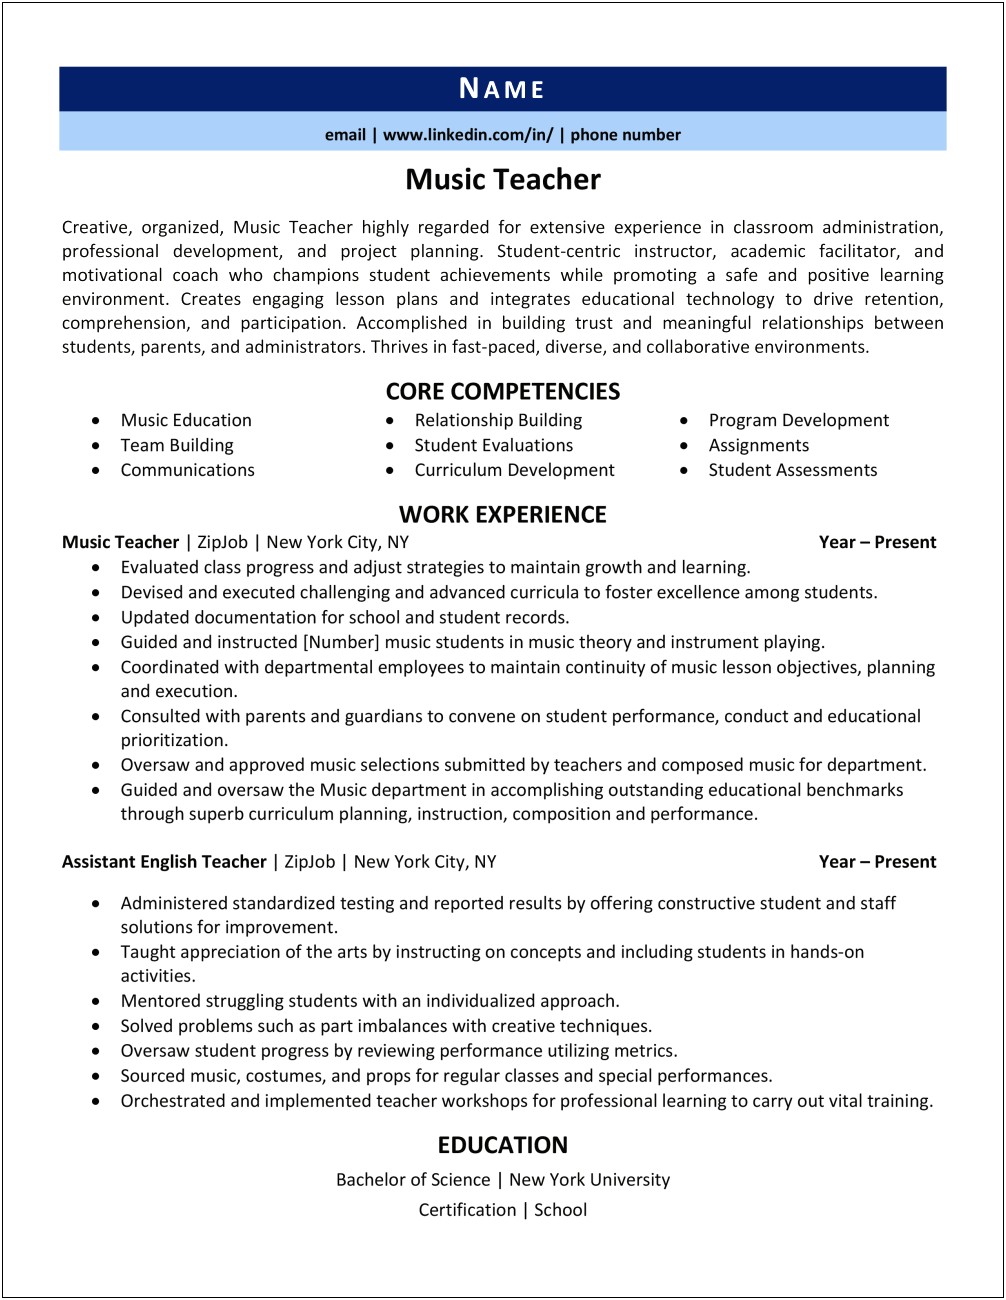 Sample Professional Summary On Resume For Teachers